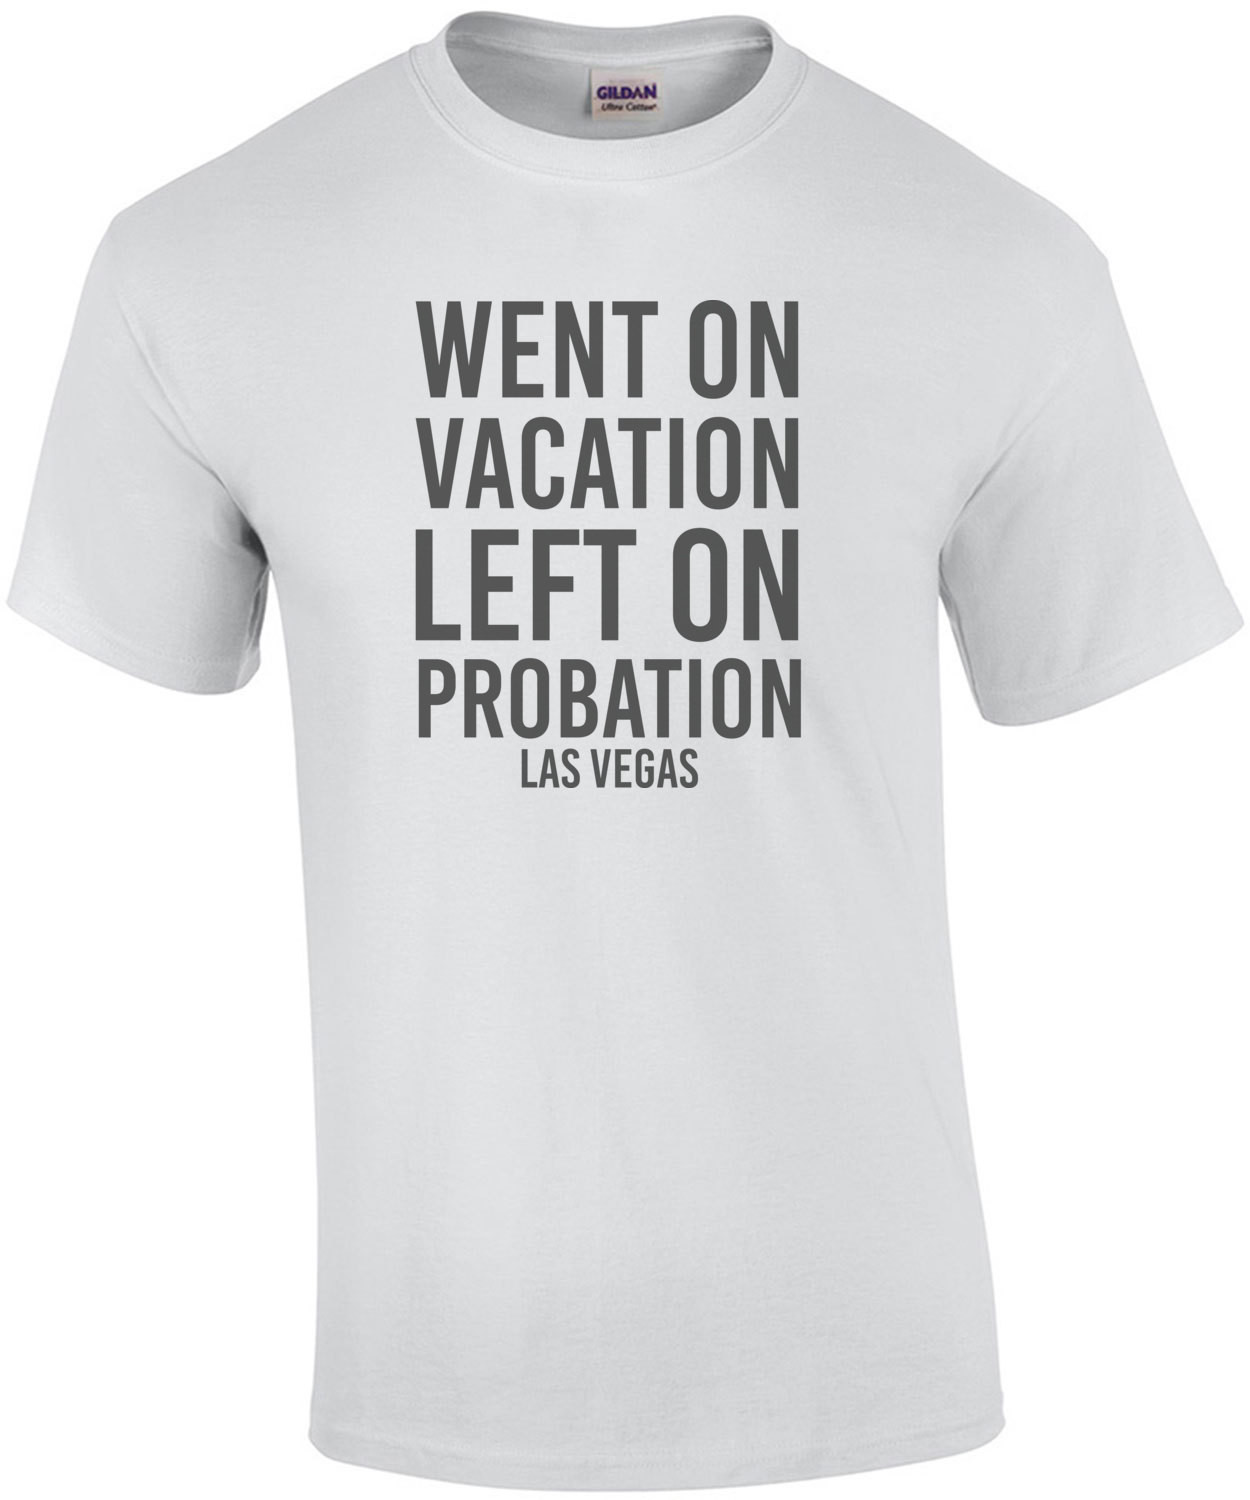 Went on vacation left on probation - Las Vegas T-Shirt - Nevada T-Shirt